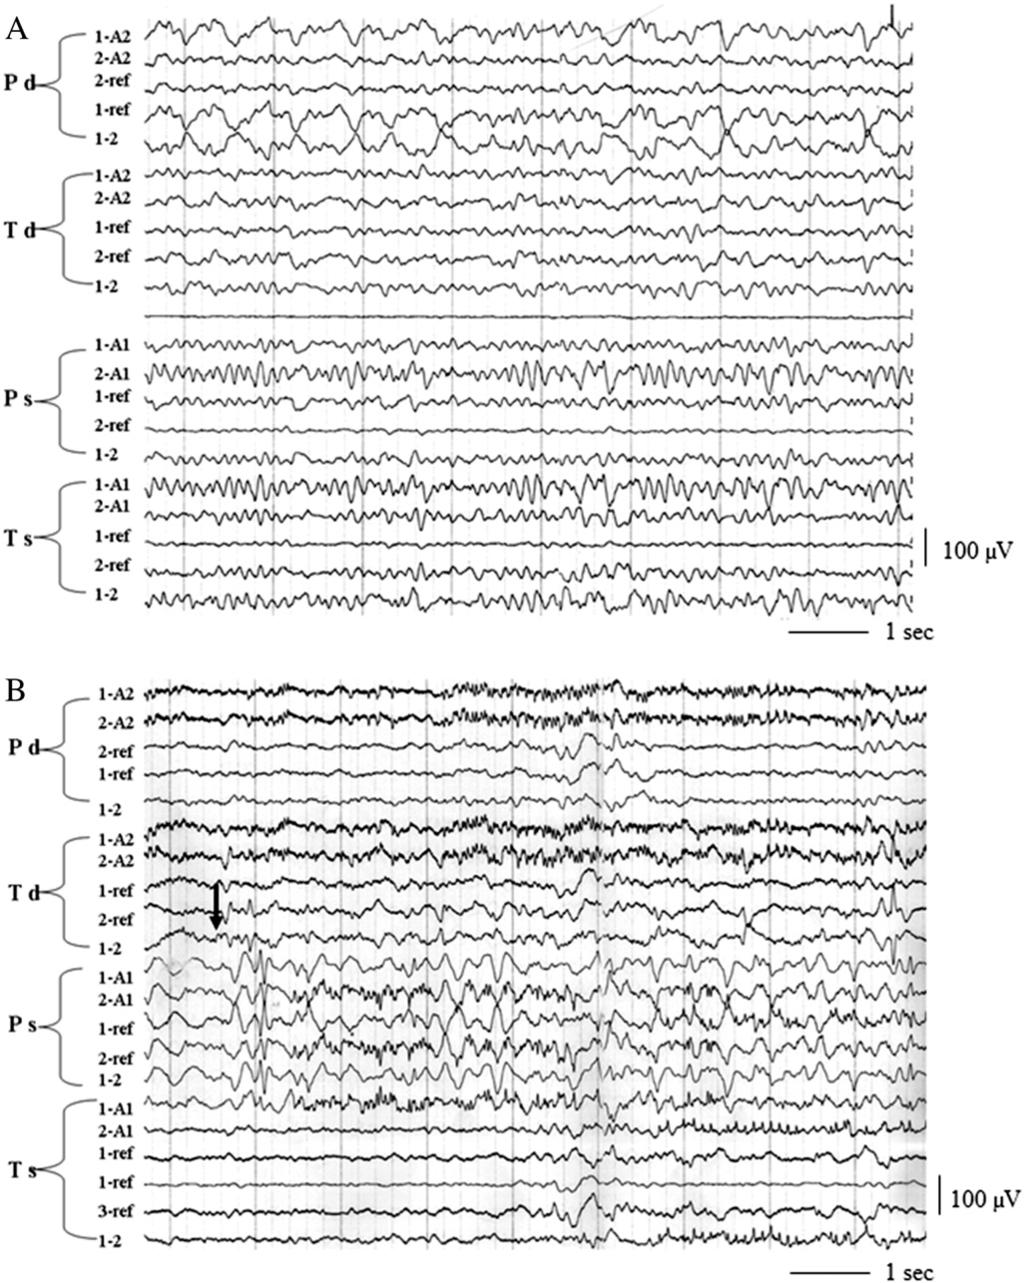 A.Y. Stepanenko et al. / Epilepsy & Behavior Case Reports 1 (2013) 45 49 47 Fig. 2. Neurophysiological findings (invasive recording).